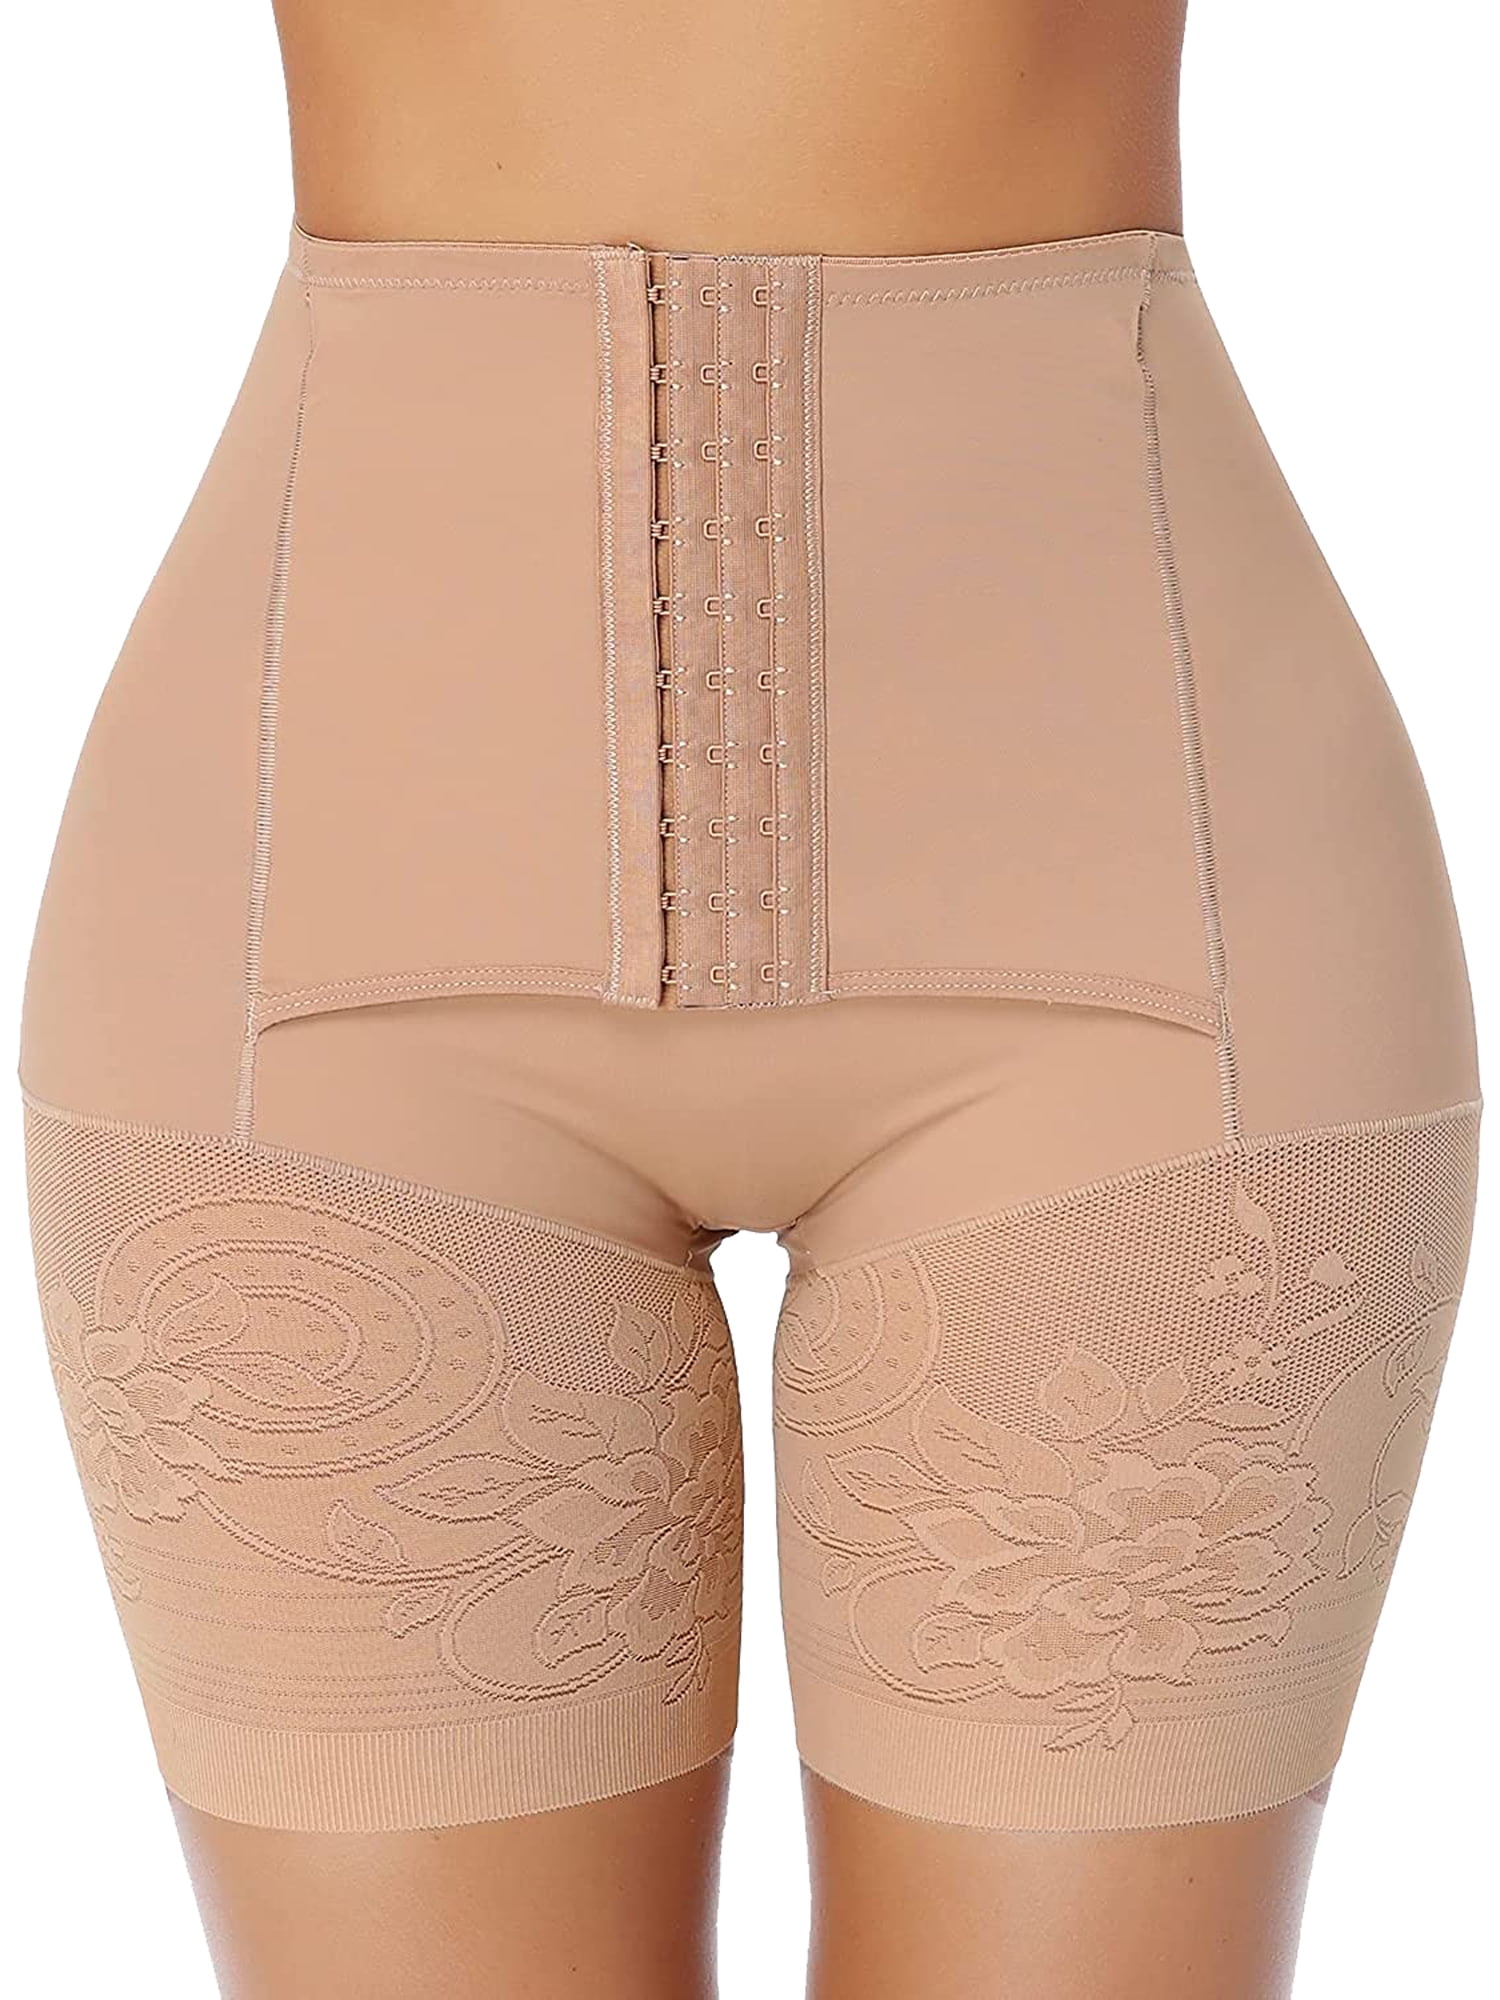 QRIC Butt Lifter Shapewear for Women Tummy Control Panties High